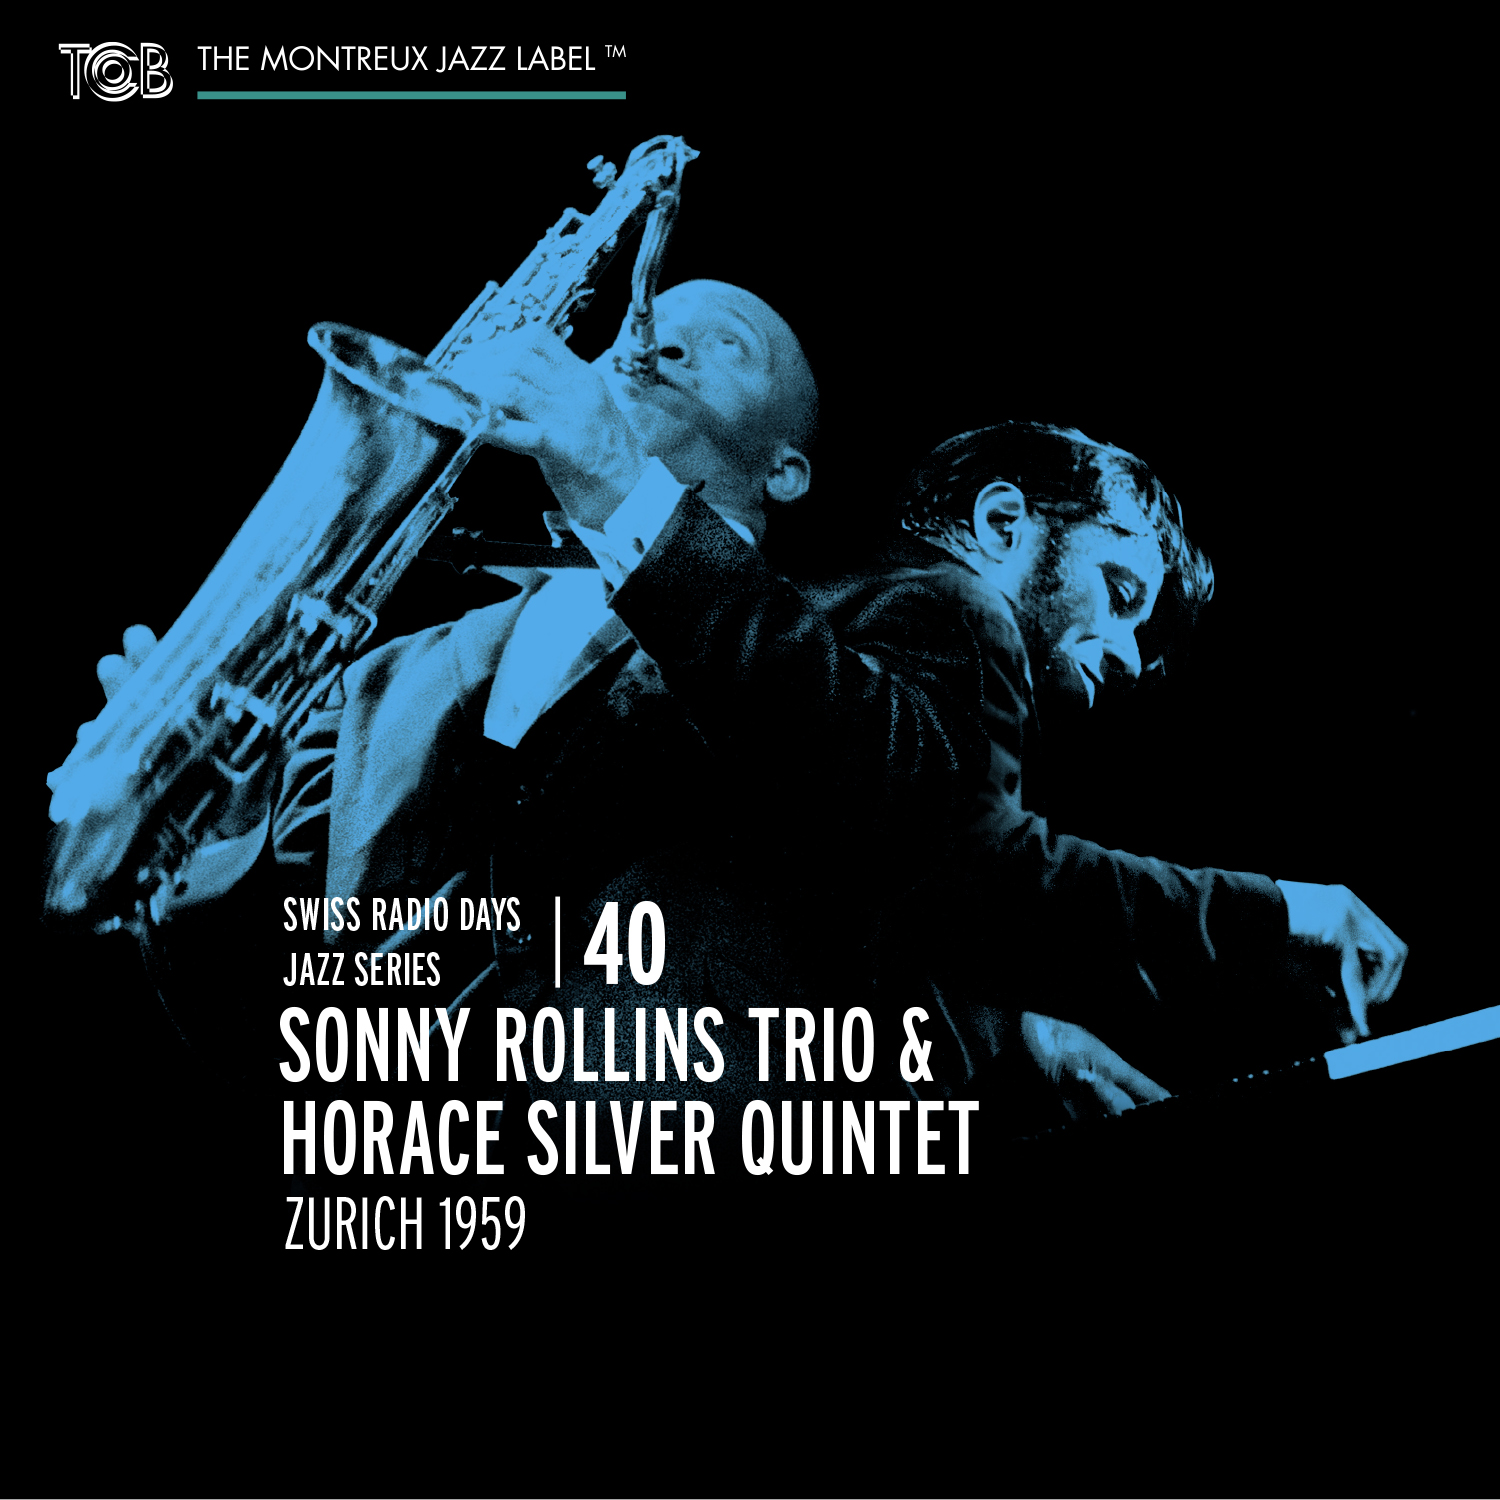 SONNY ROLLINS - Sonny Rollins Trio & Horace Silver Quintet : Zurich 1959 - Swiss Radio Days Vol 40 cover 